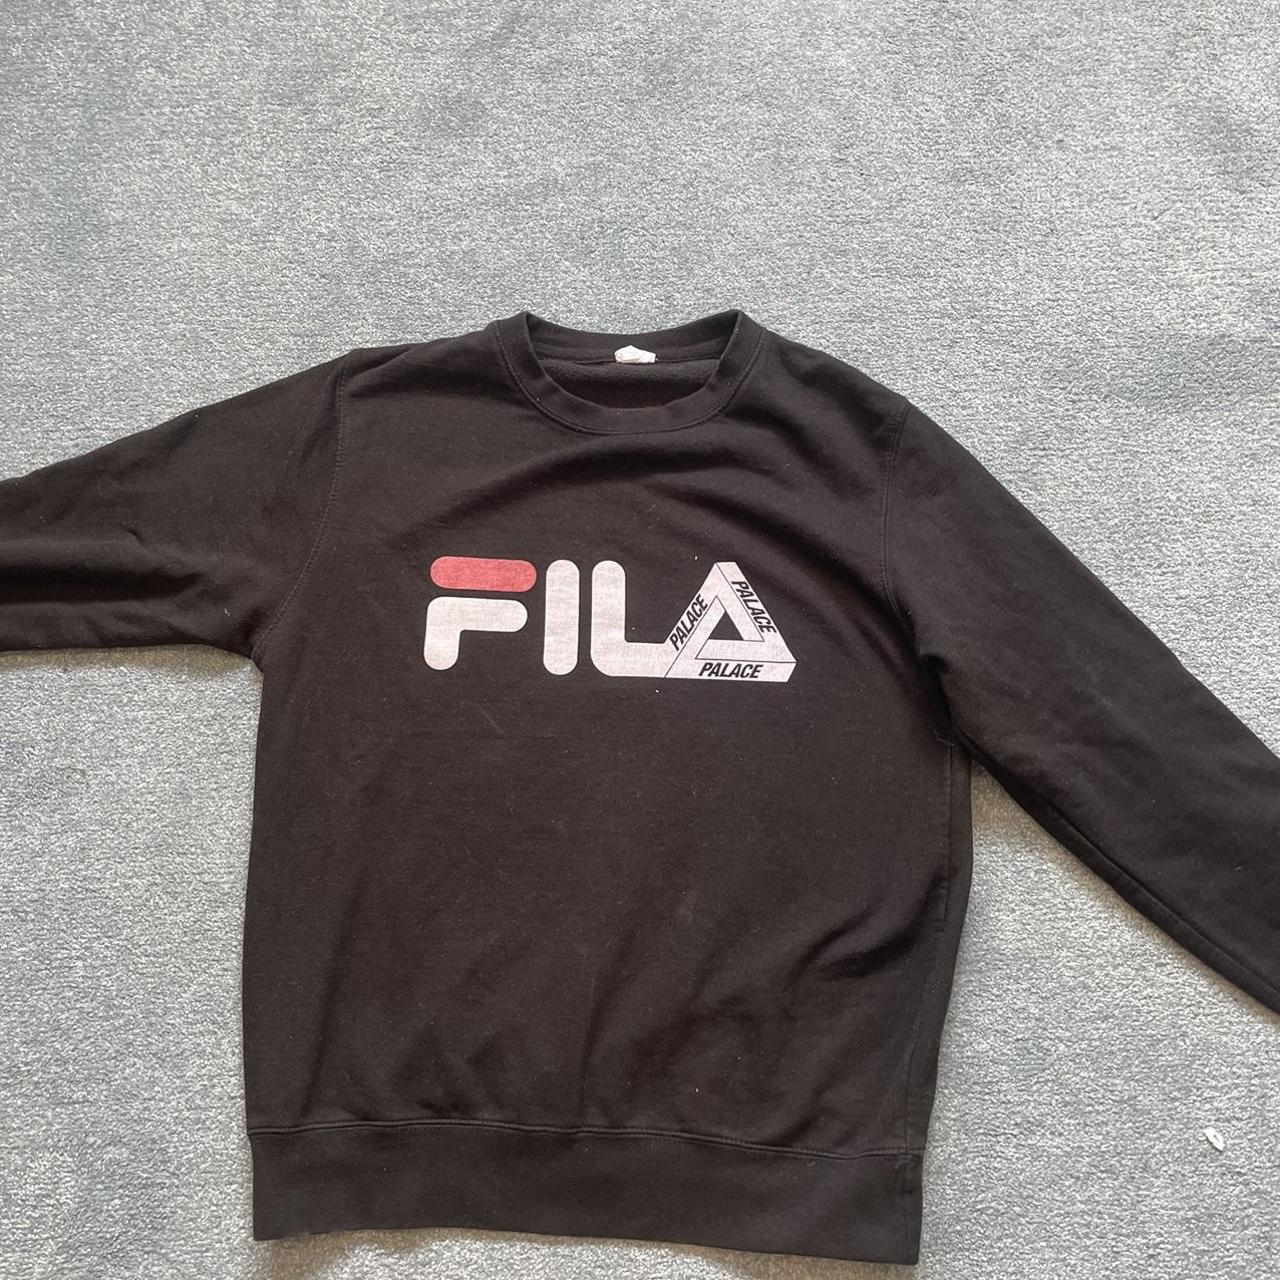 Fila and palace black jumper / sweatshirt Men’s... - Depop